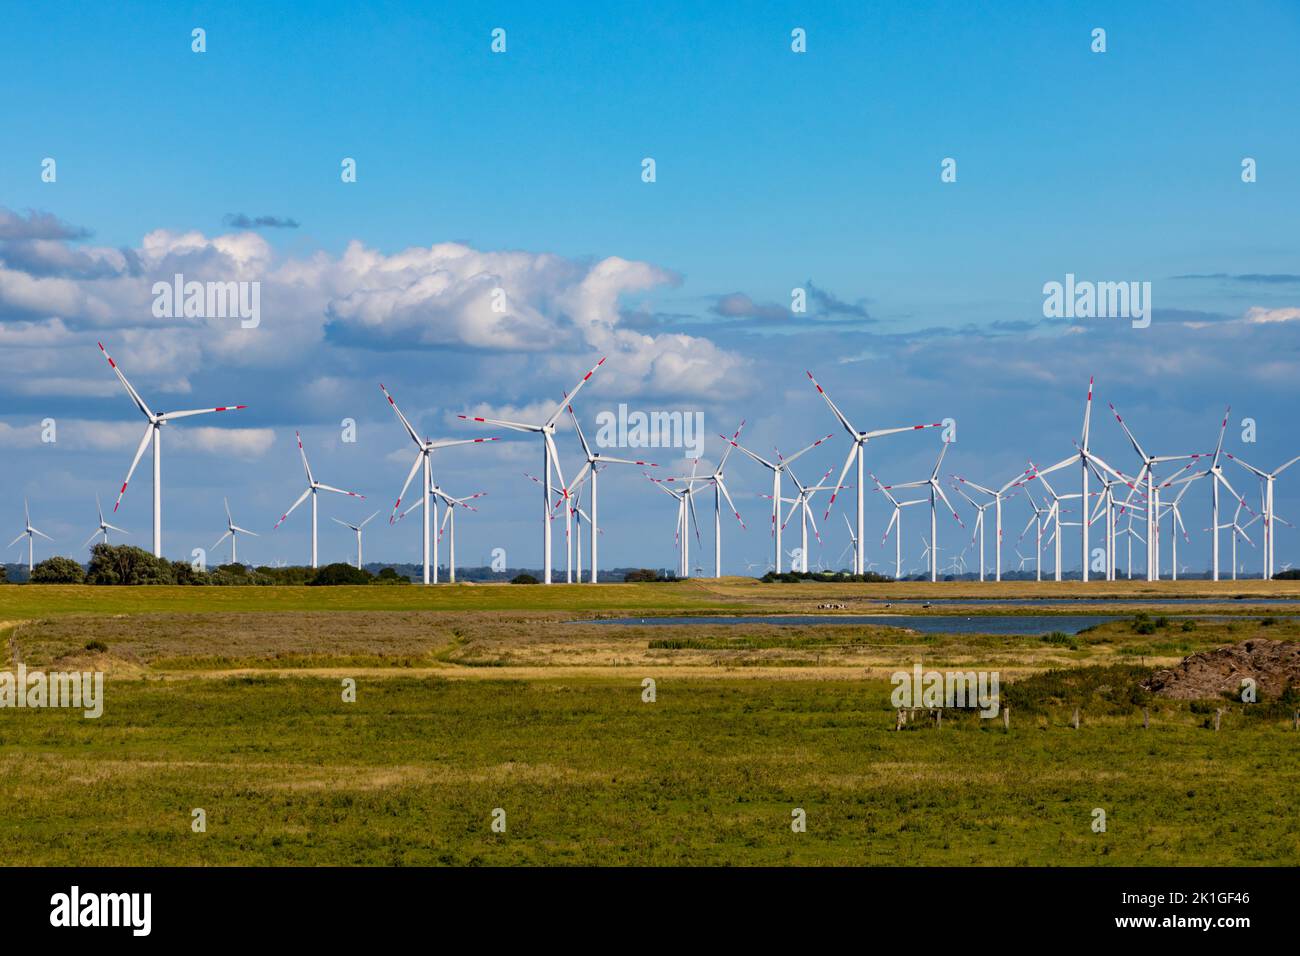 Wind farm with many wind turbines on the horizon Stock Photo